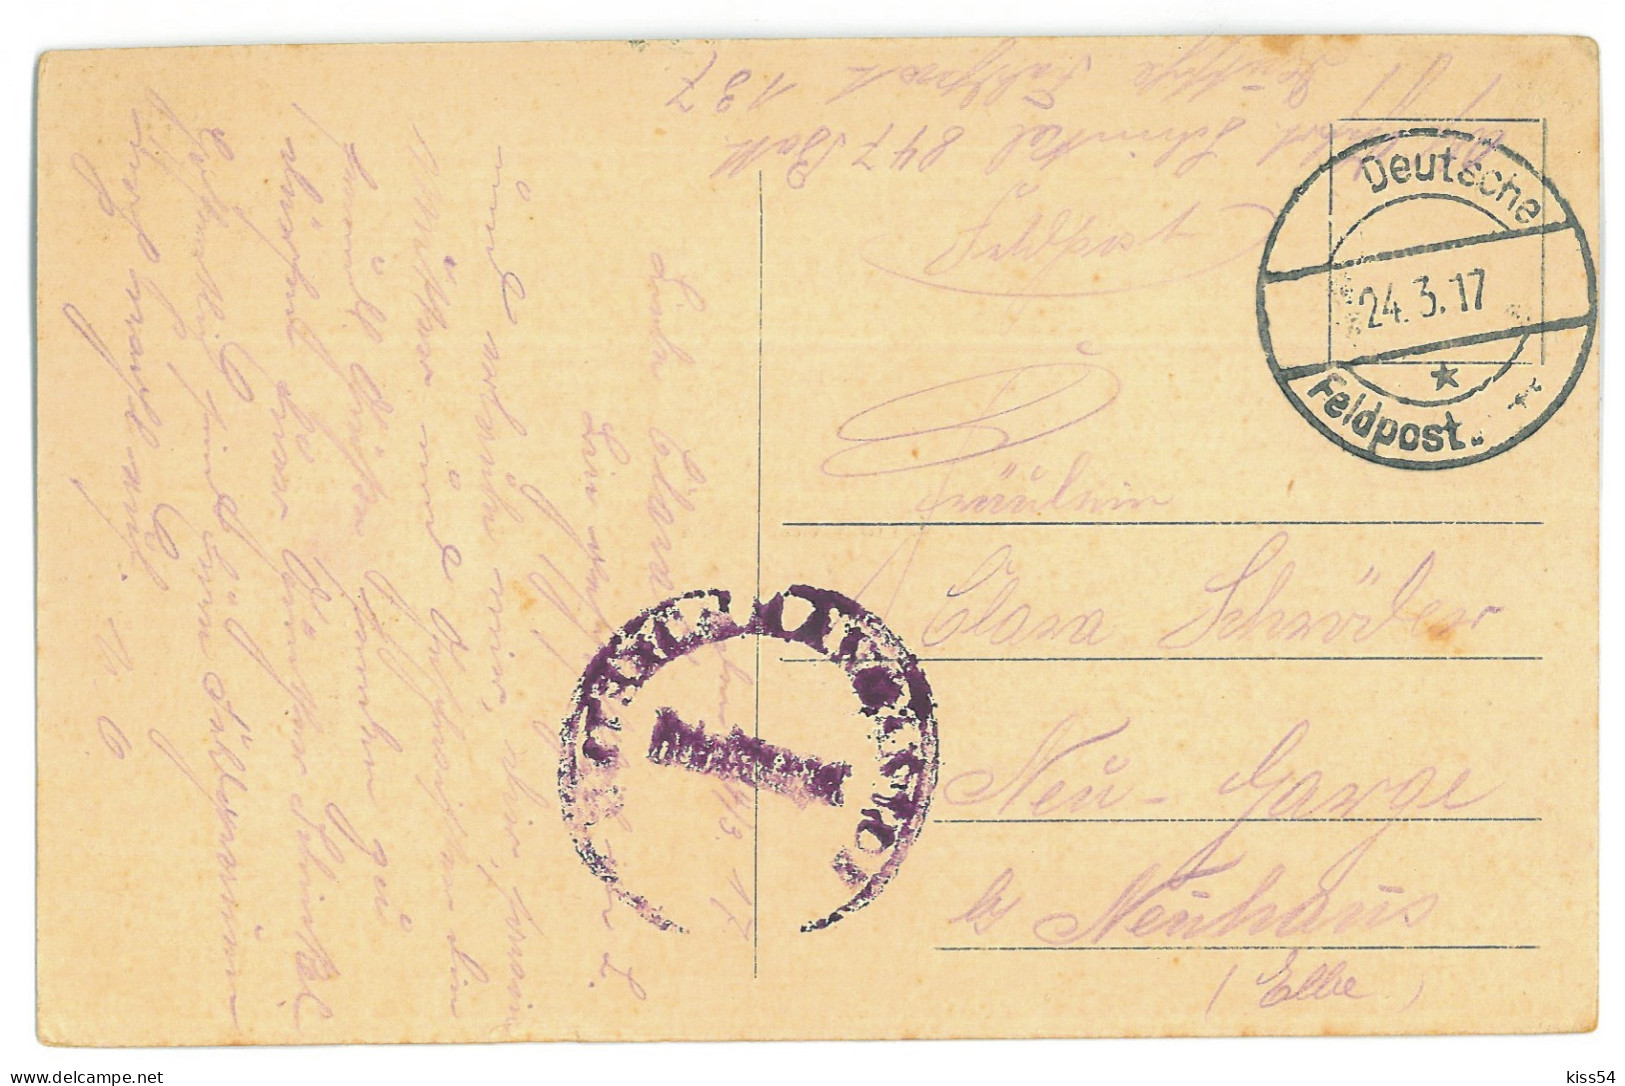 BL 31 - 24499 LIDA, Belarus - Old Postcard, CENSOR - Used - 1917 - Bielorussia